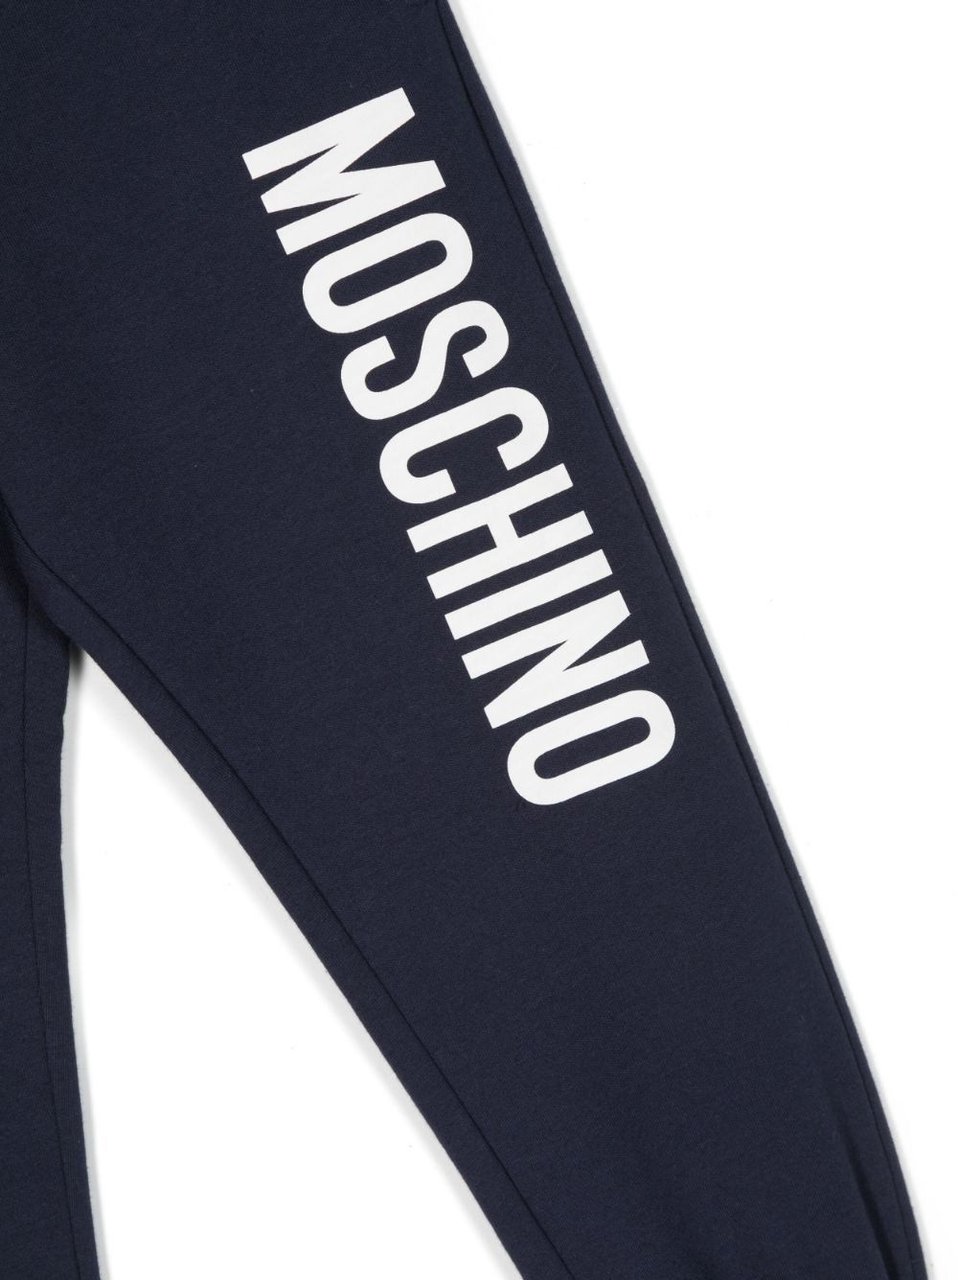 Moschino pantalone lungo darkblue (navy) Blauw